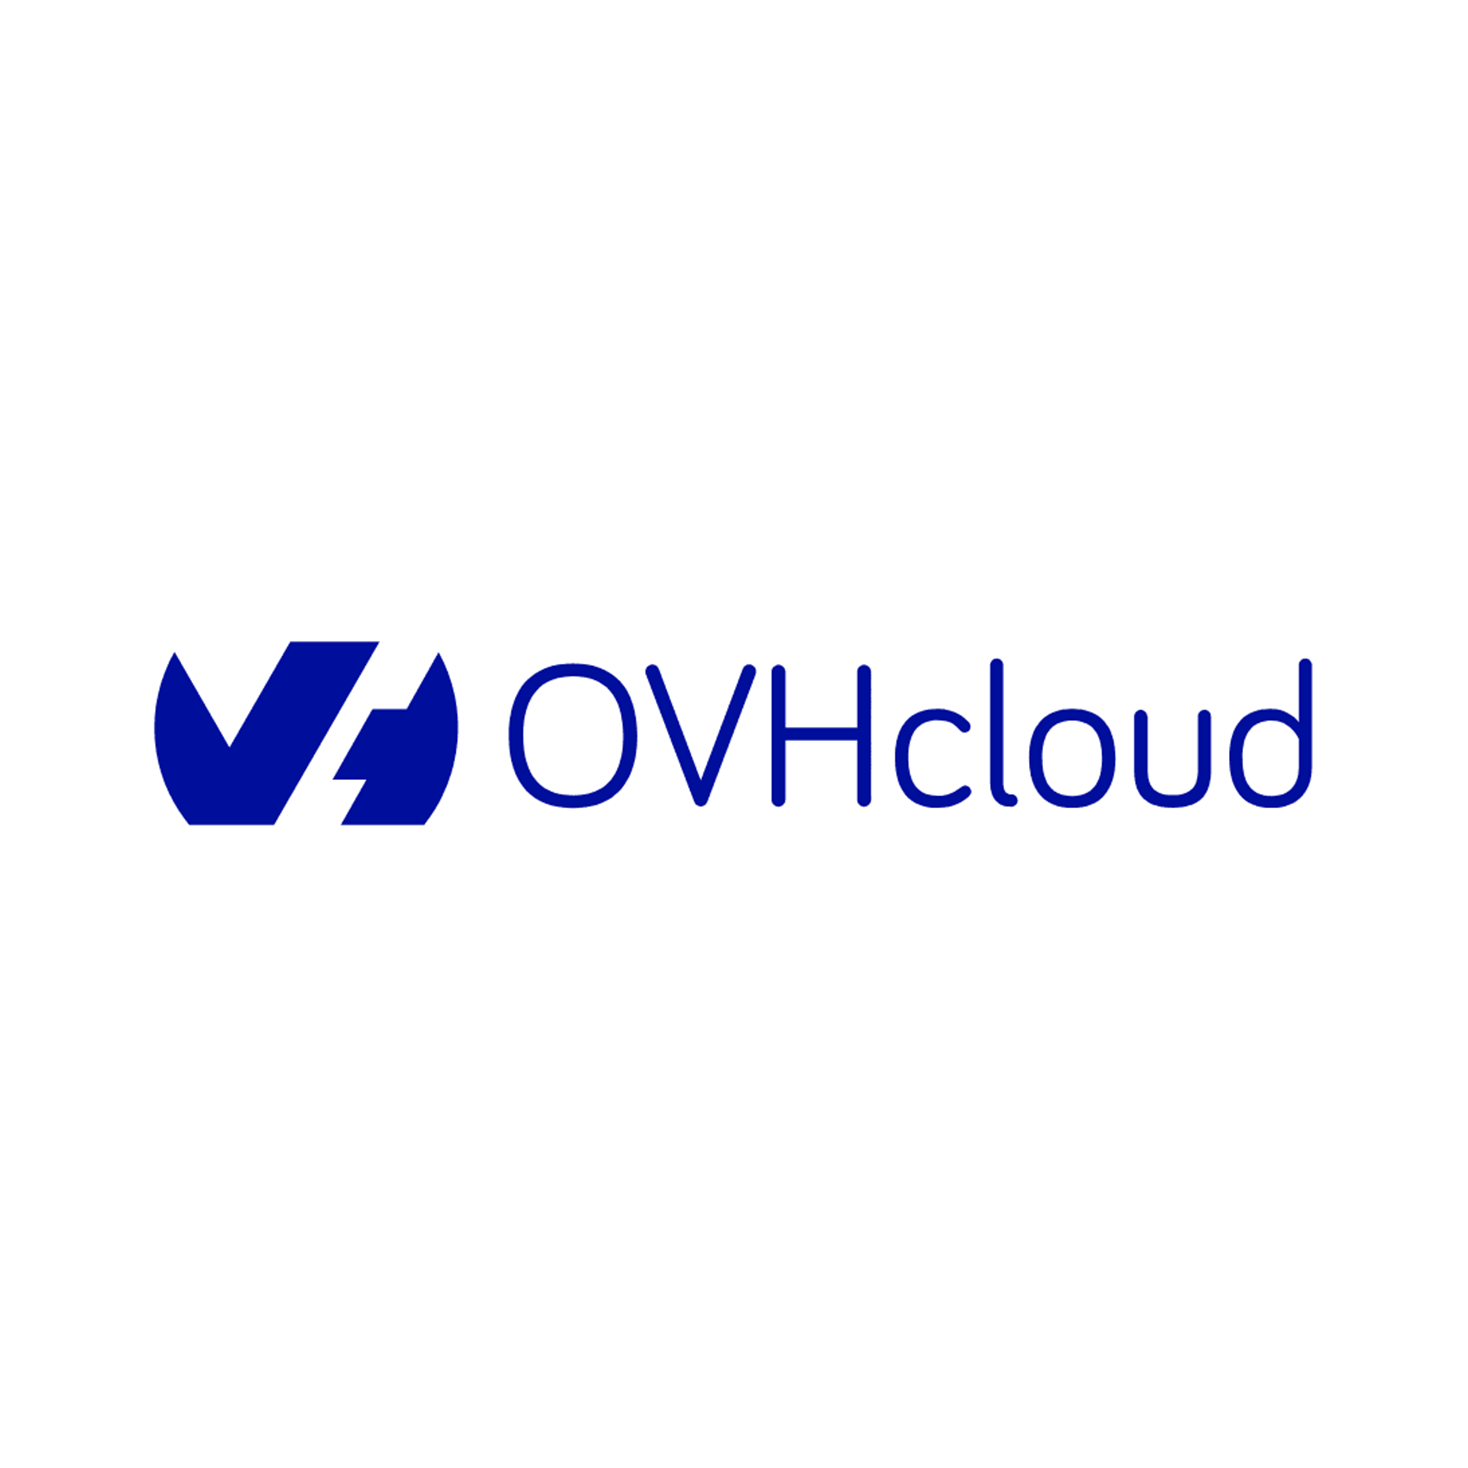 ovh-cloud-logo-vr-360